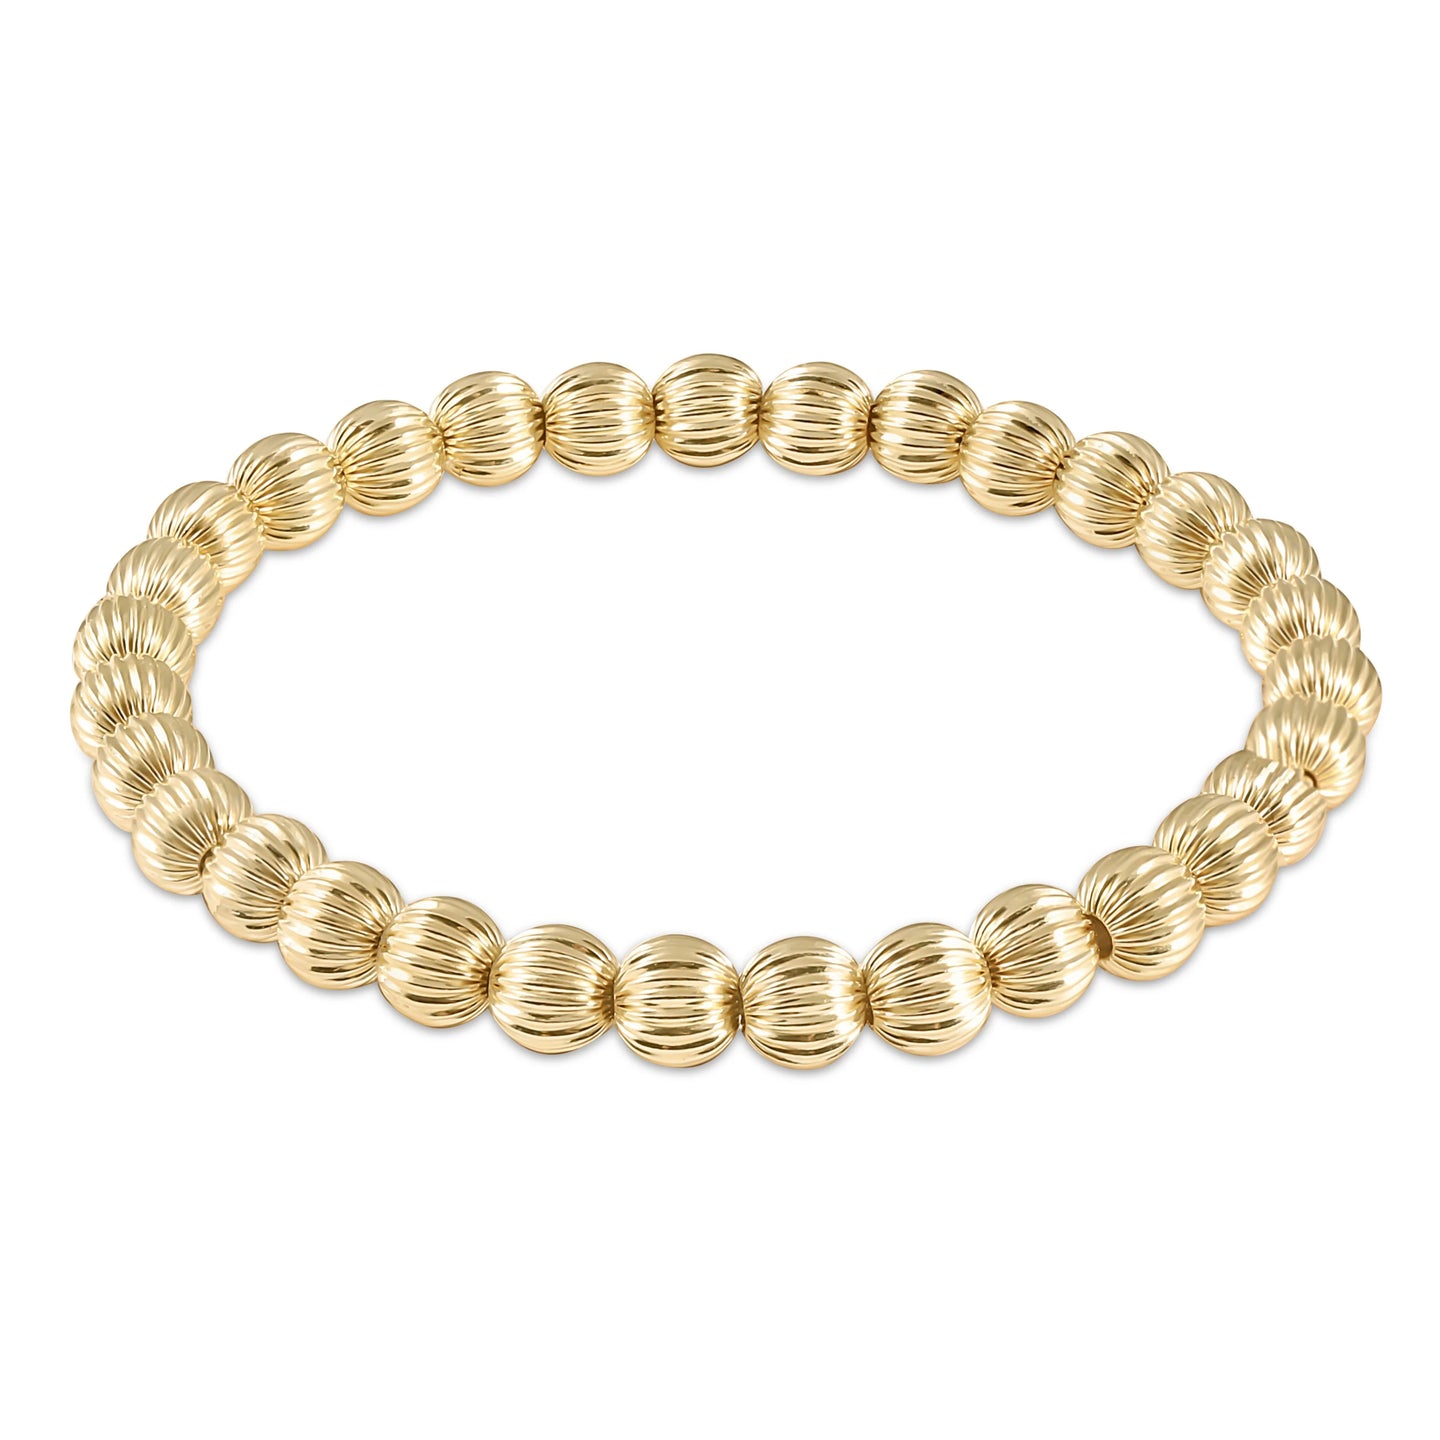 enewton extends - Dignity Gold 6mm Bead Bracelet